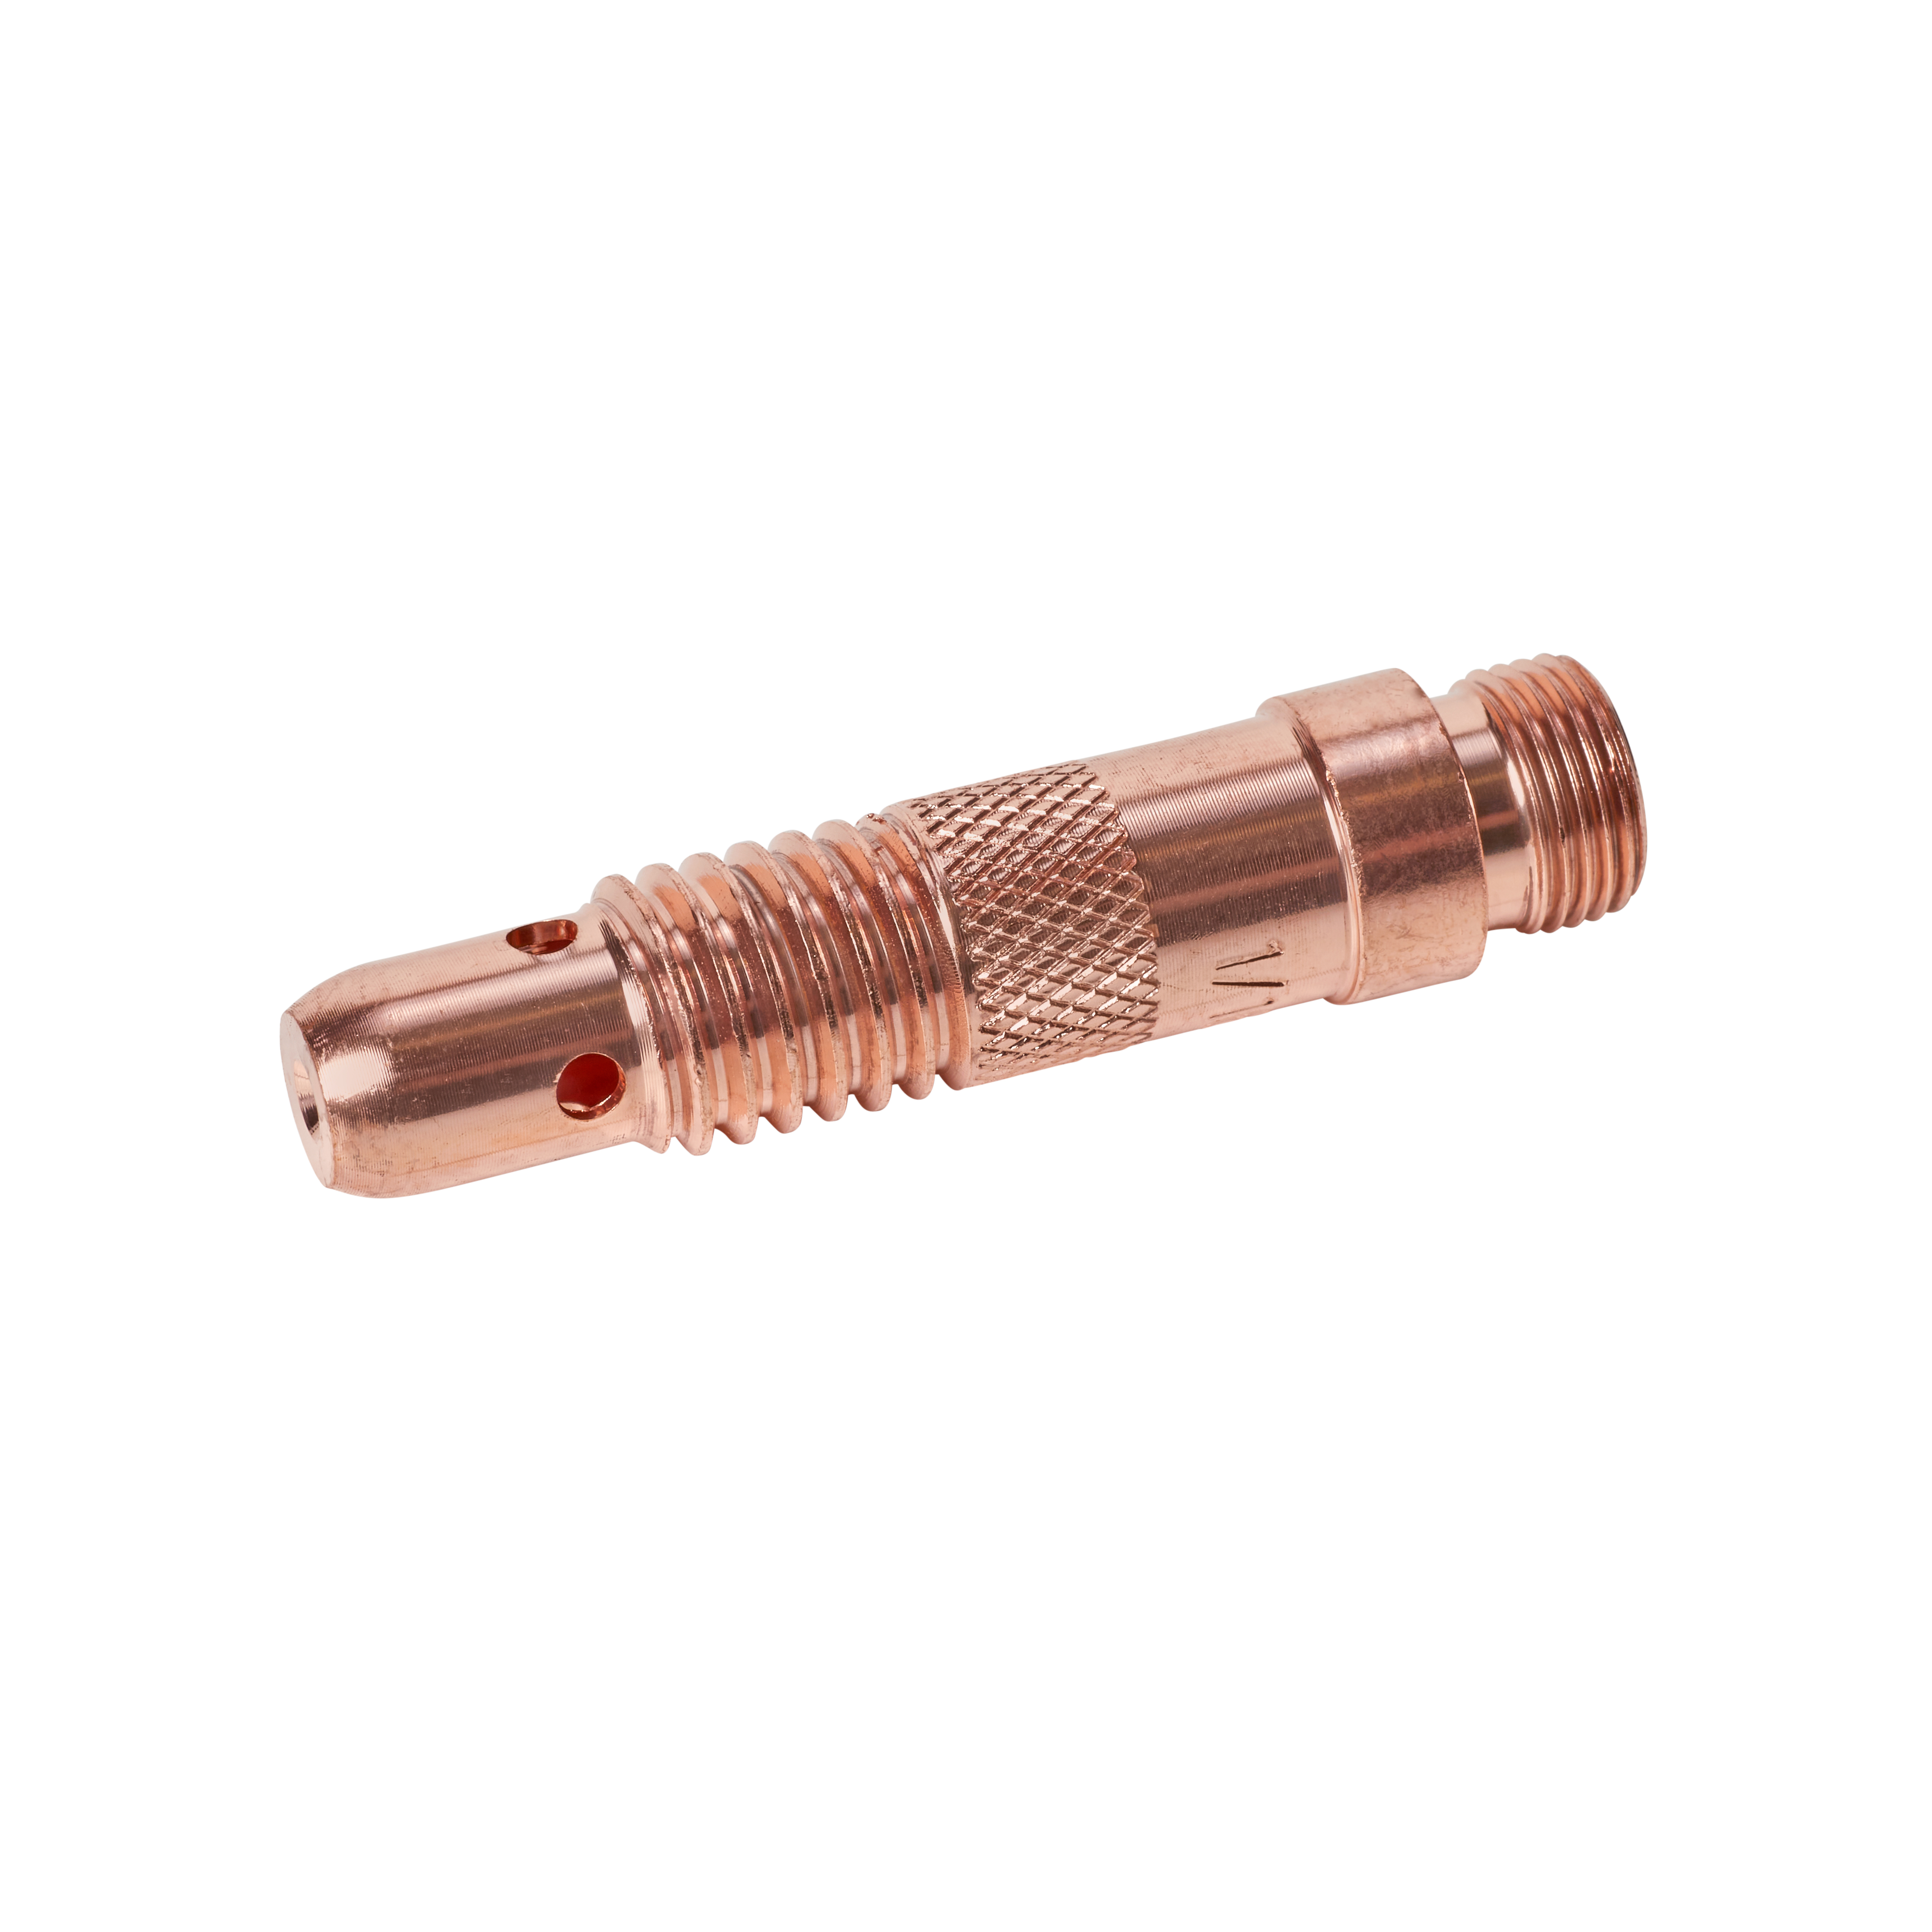 Weldmark by CK Worldwide 10N31 Copper Collet Body 1/16 (0.0625) Max Electrode Diameter